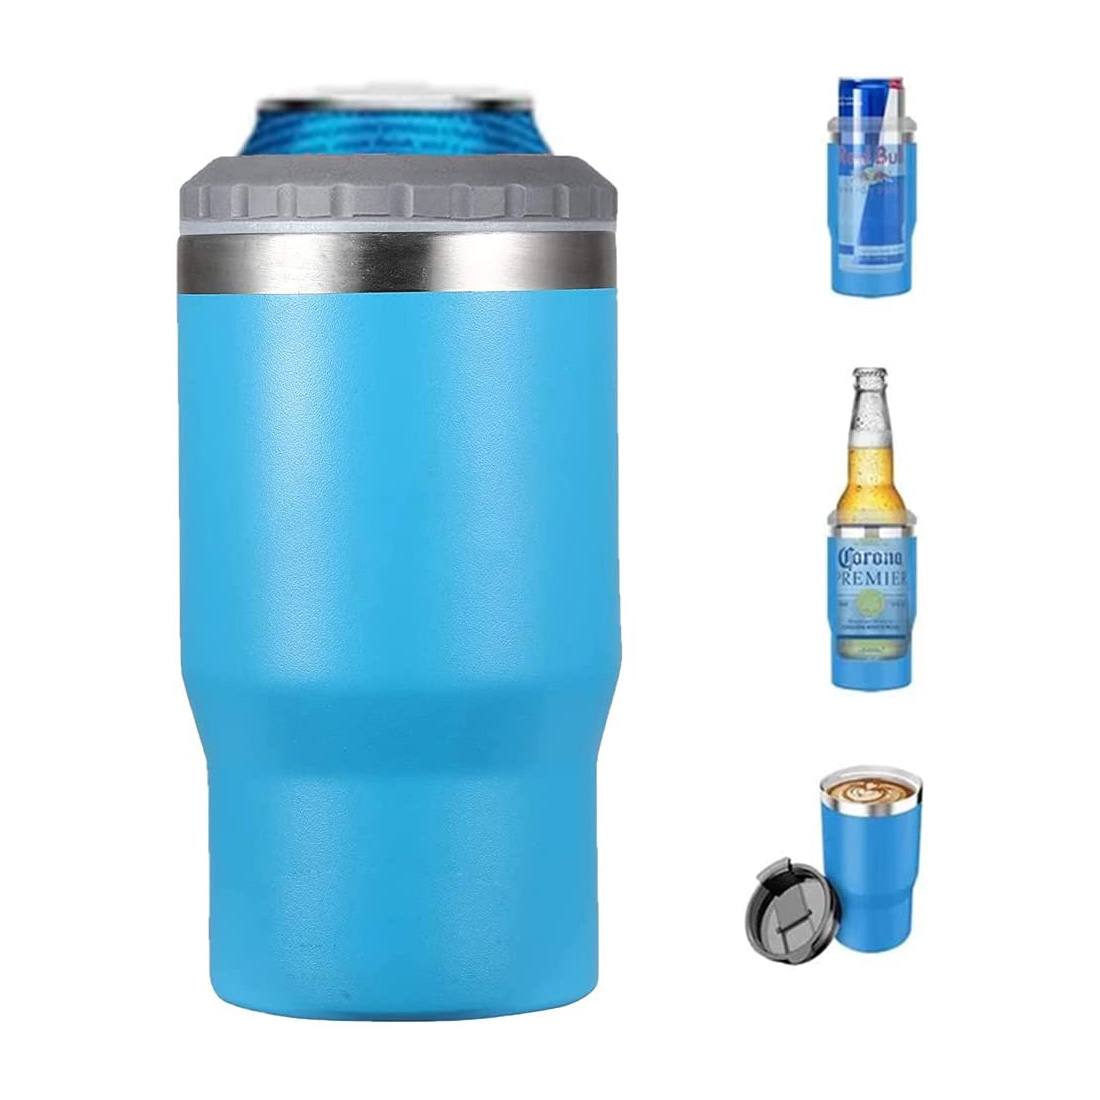 https://www.waterbottle.tech/wp-content/uploads/2022/04/4-in-1-Stainless-Steel-Koozie-Can-Cooler-Beer-Bottle-Insulator14oz-s011454-1.jpg